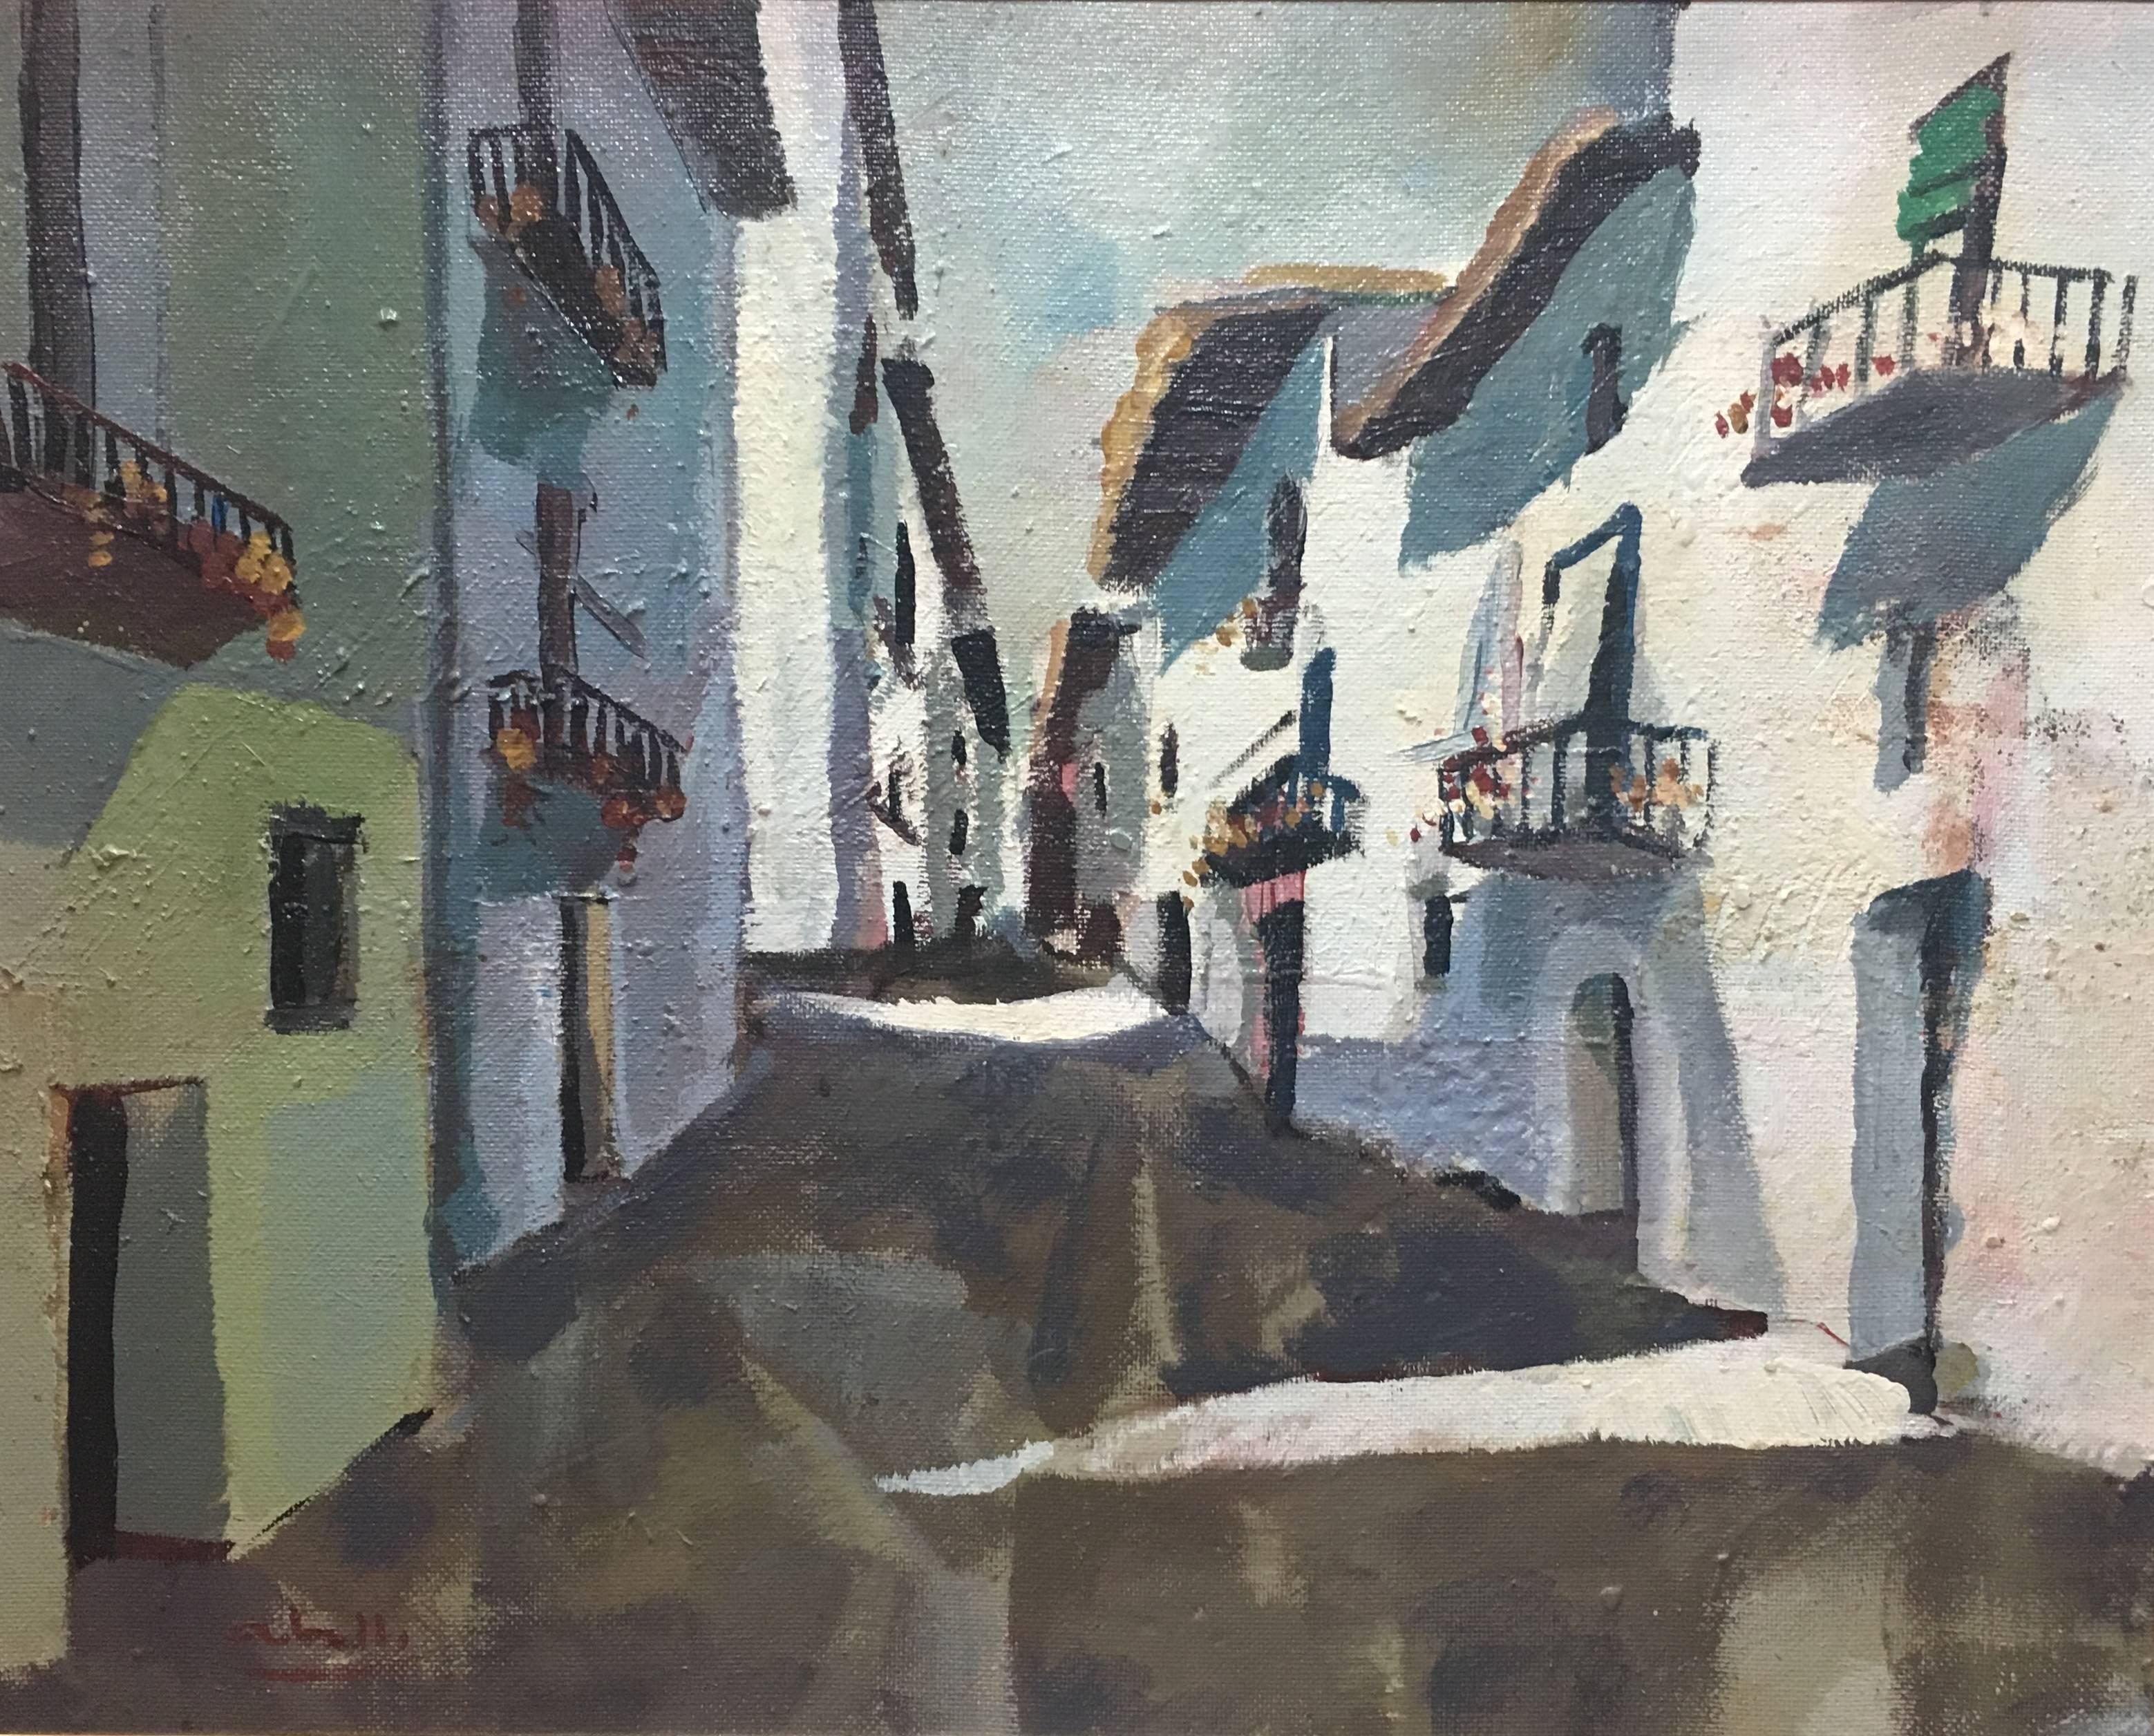  Abella   Town Street Original landscape Cubist acrylic painting - Expressionist Painting by Juan Jose Abella Rubio